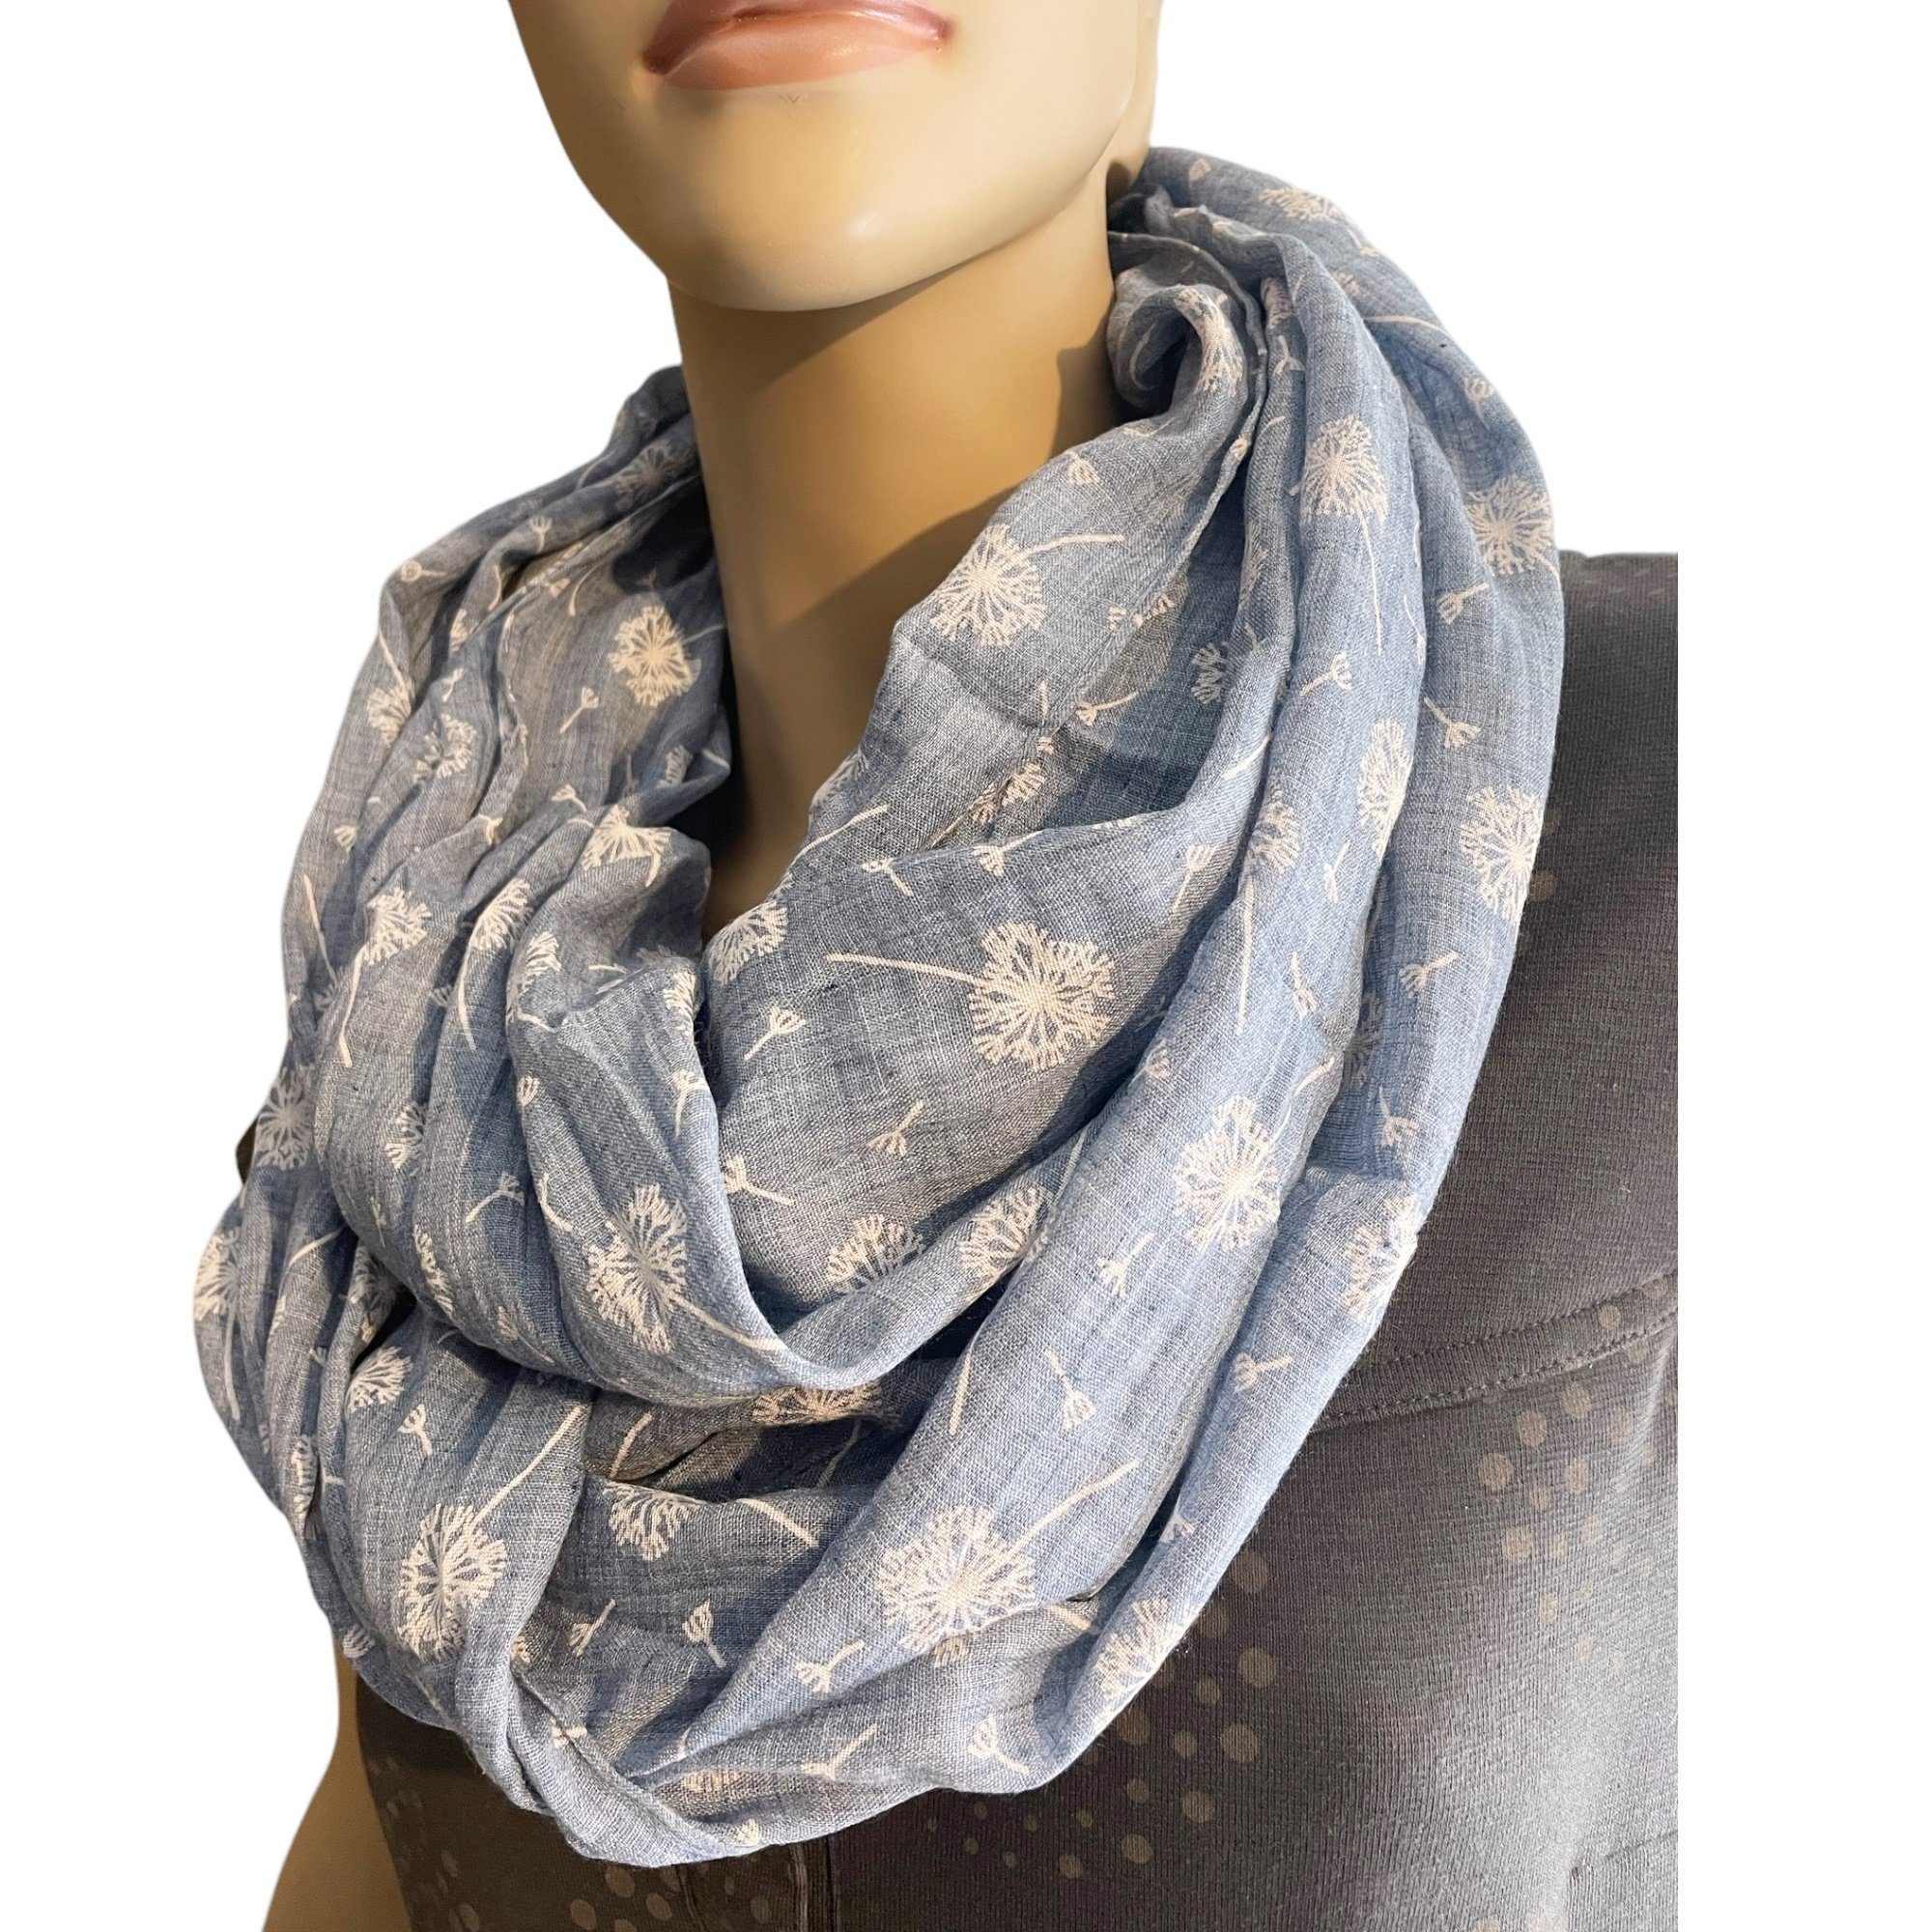 Taschen4life Loop & Trend Farbwahl, Pusteblumen Tücher print, mit Schal Schals SS-731 Sommer Damen Muster, stoneblue